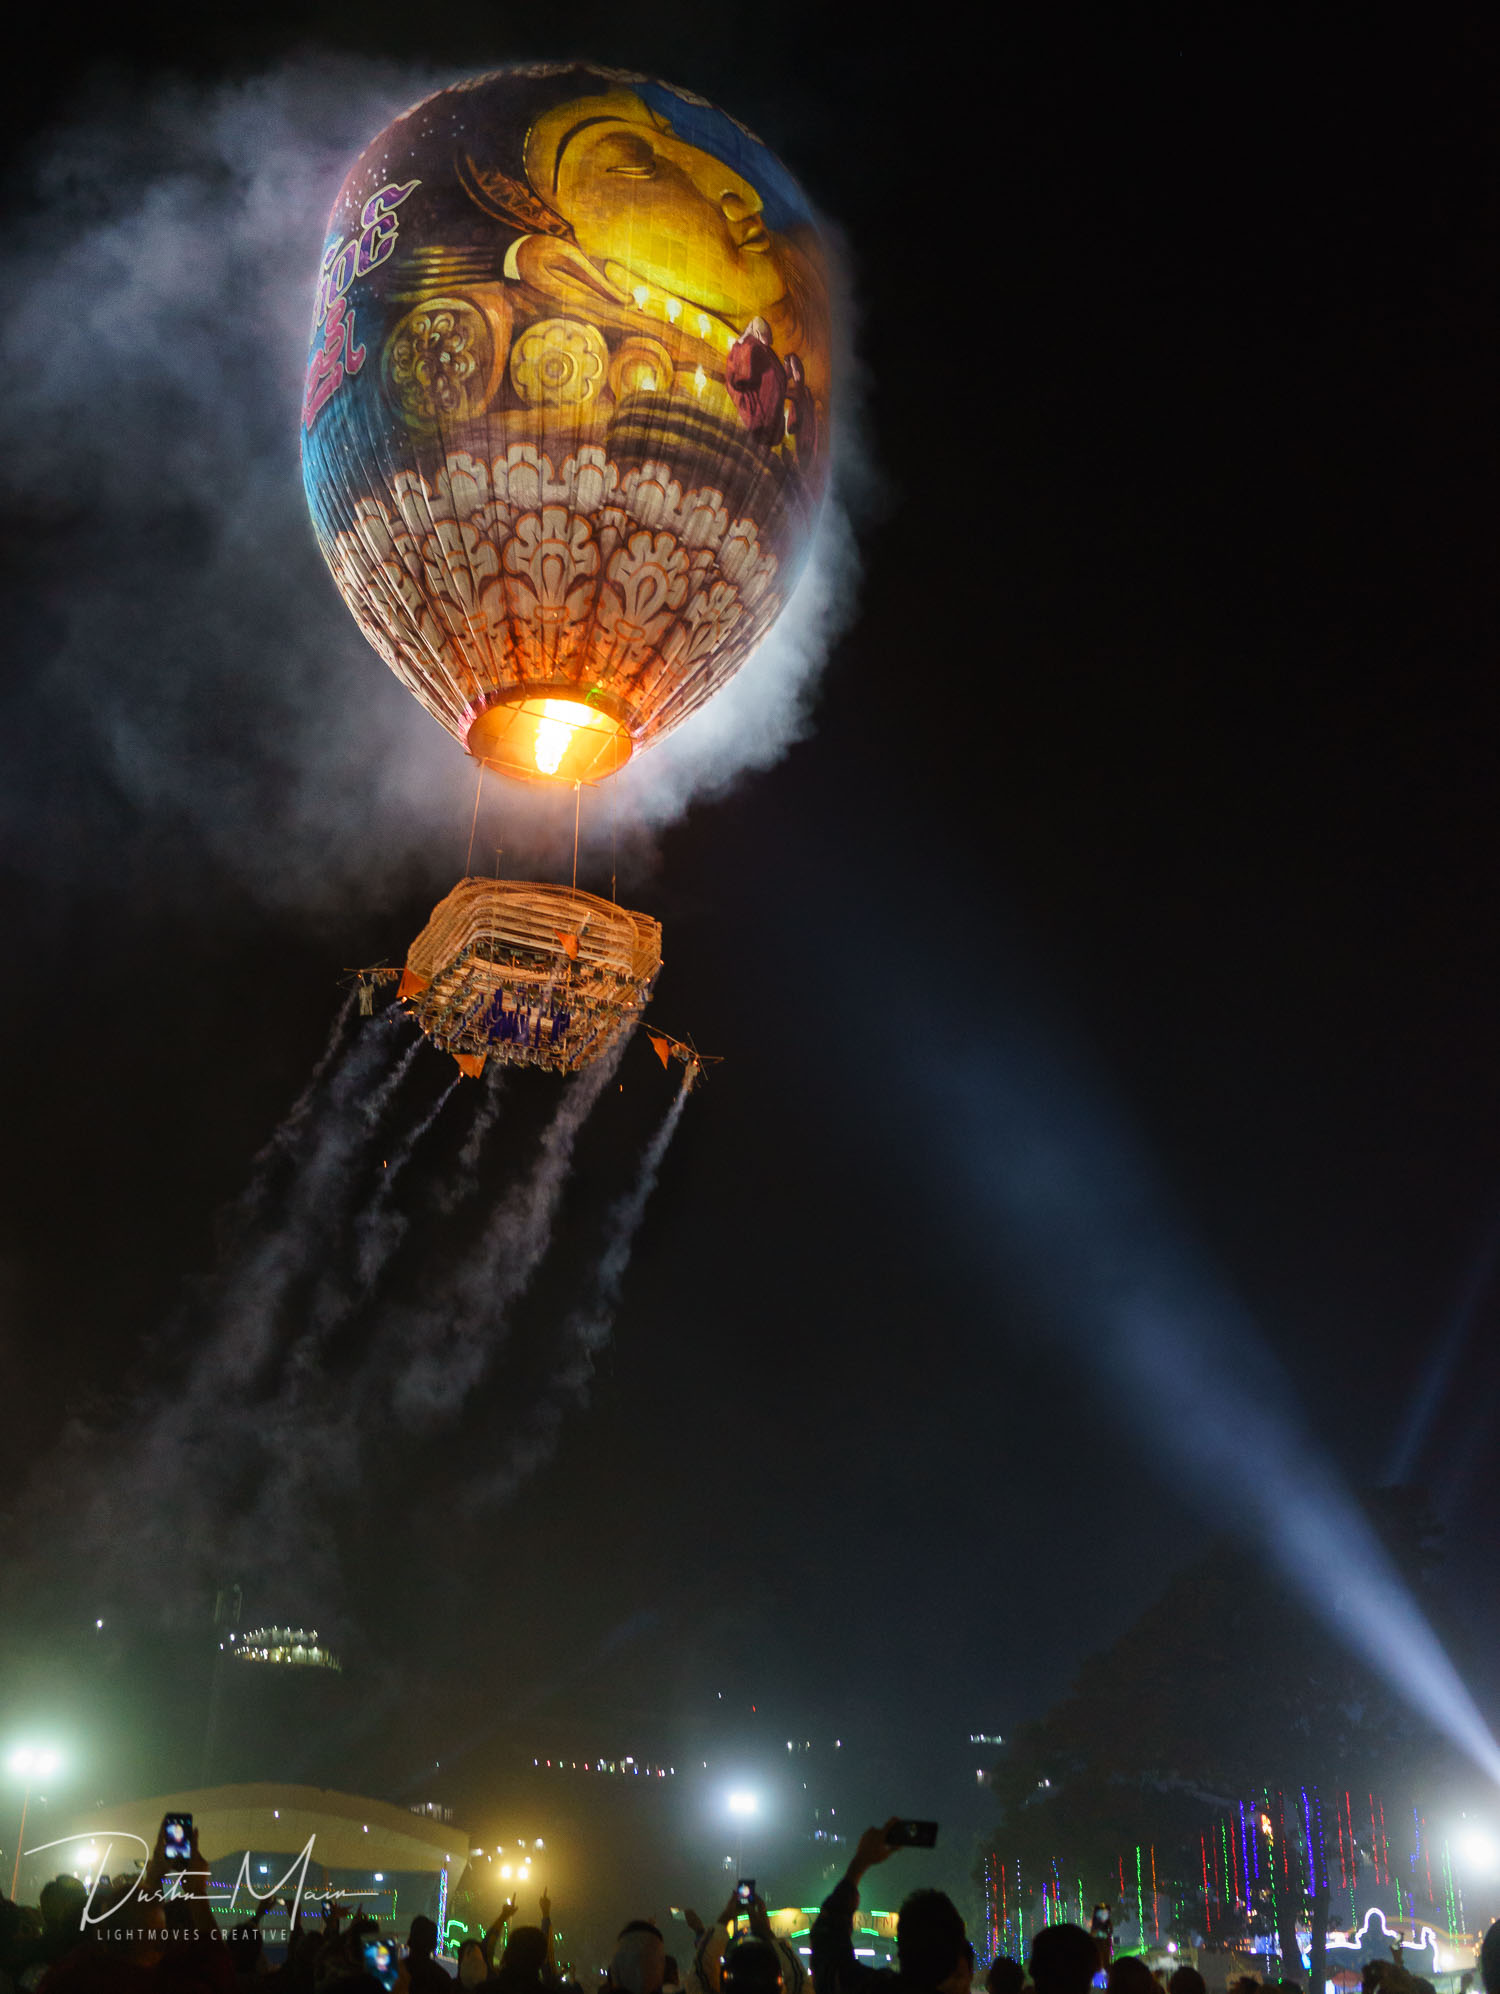  Nya Mee Gyi takes off at the Tazaungdaing Fire Balloon Festival  © Dustin Main 2015 